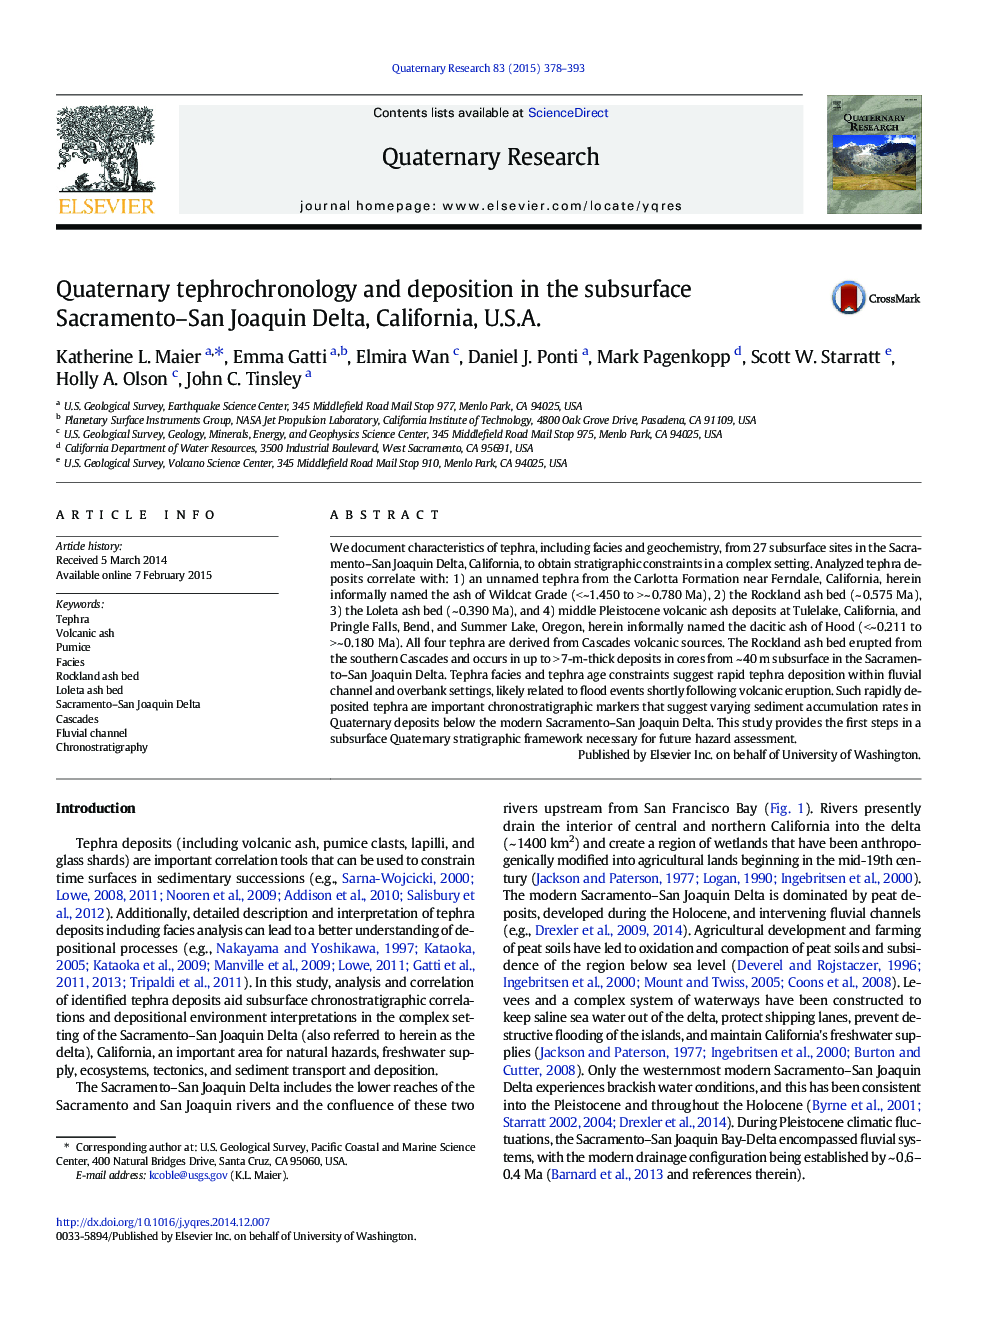 Quaternary tephrochronology and deposition in the subsurface Sacramento–San Joaquin Delta, California, U.S.A.